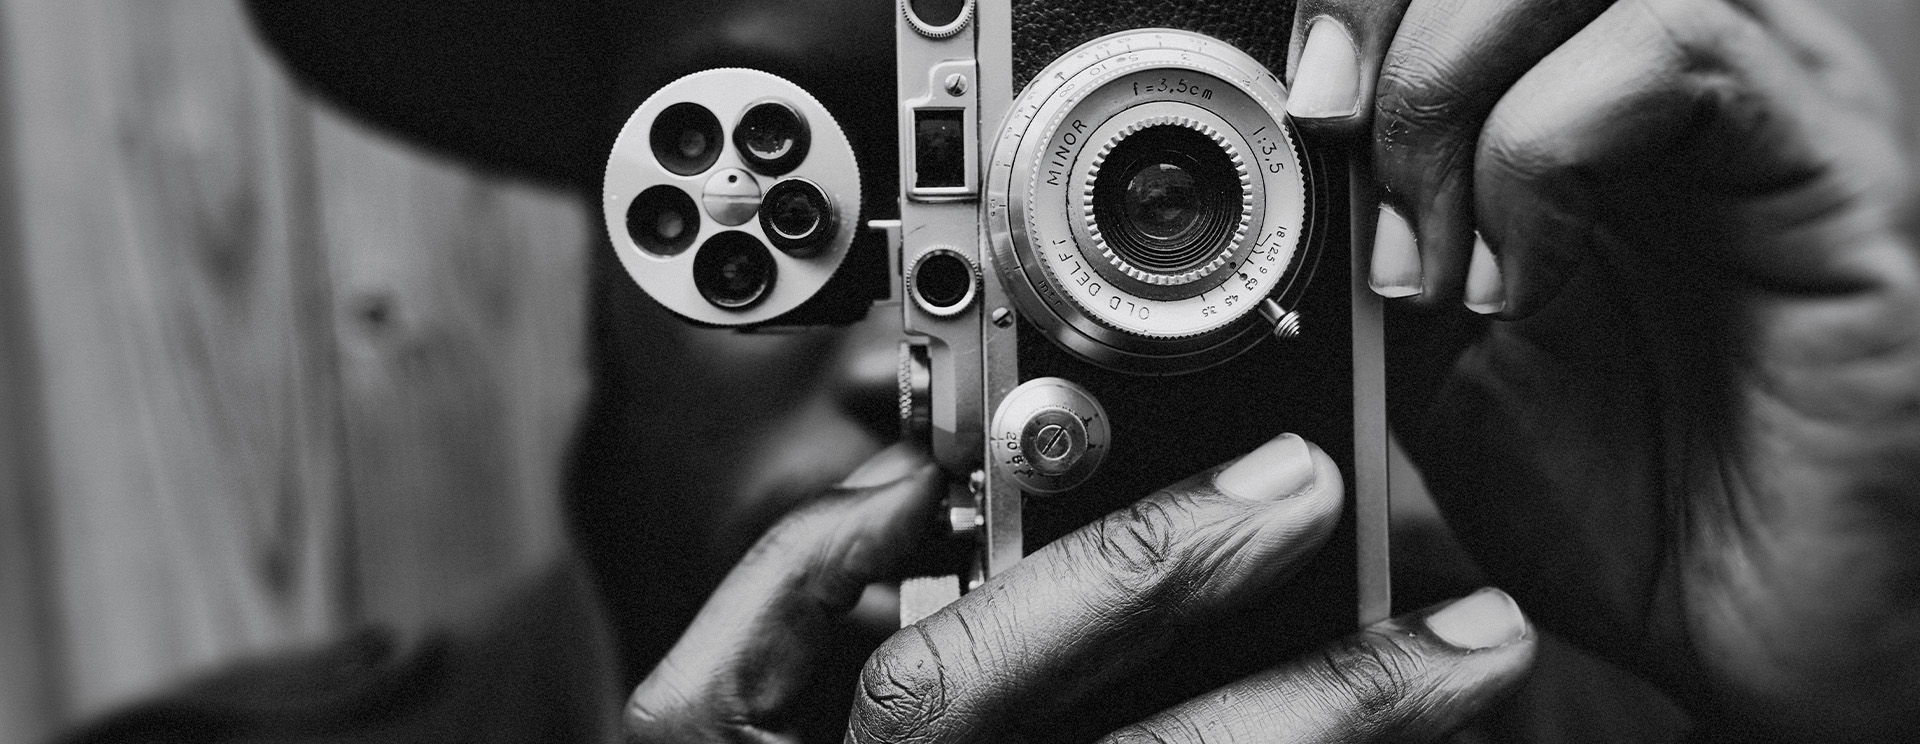 man taking photo with film camera